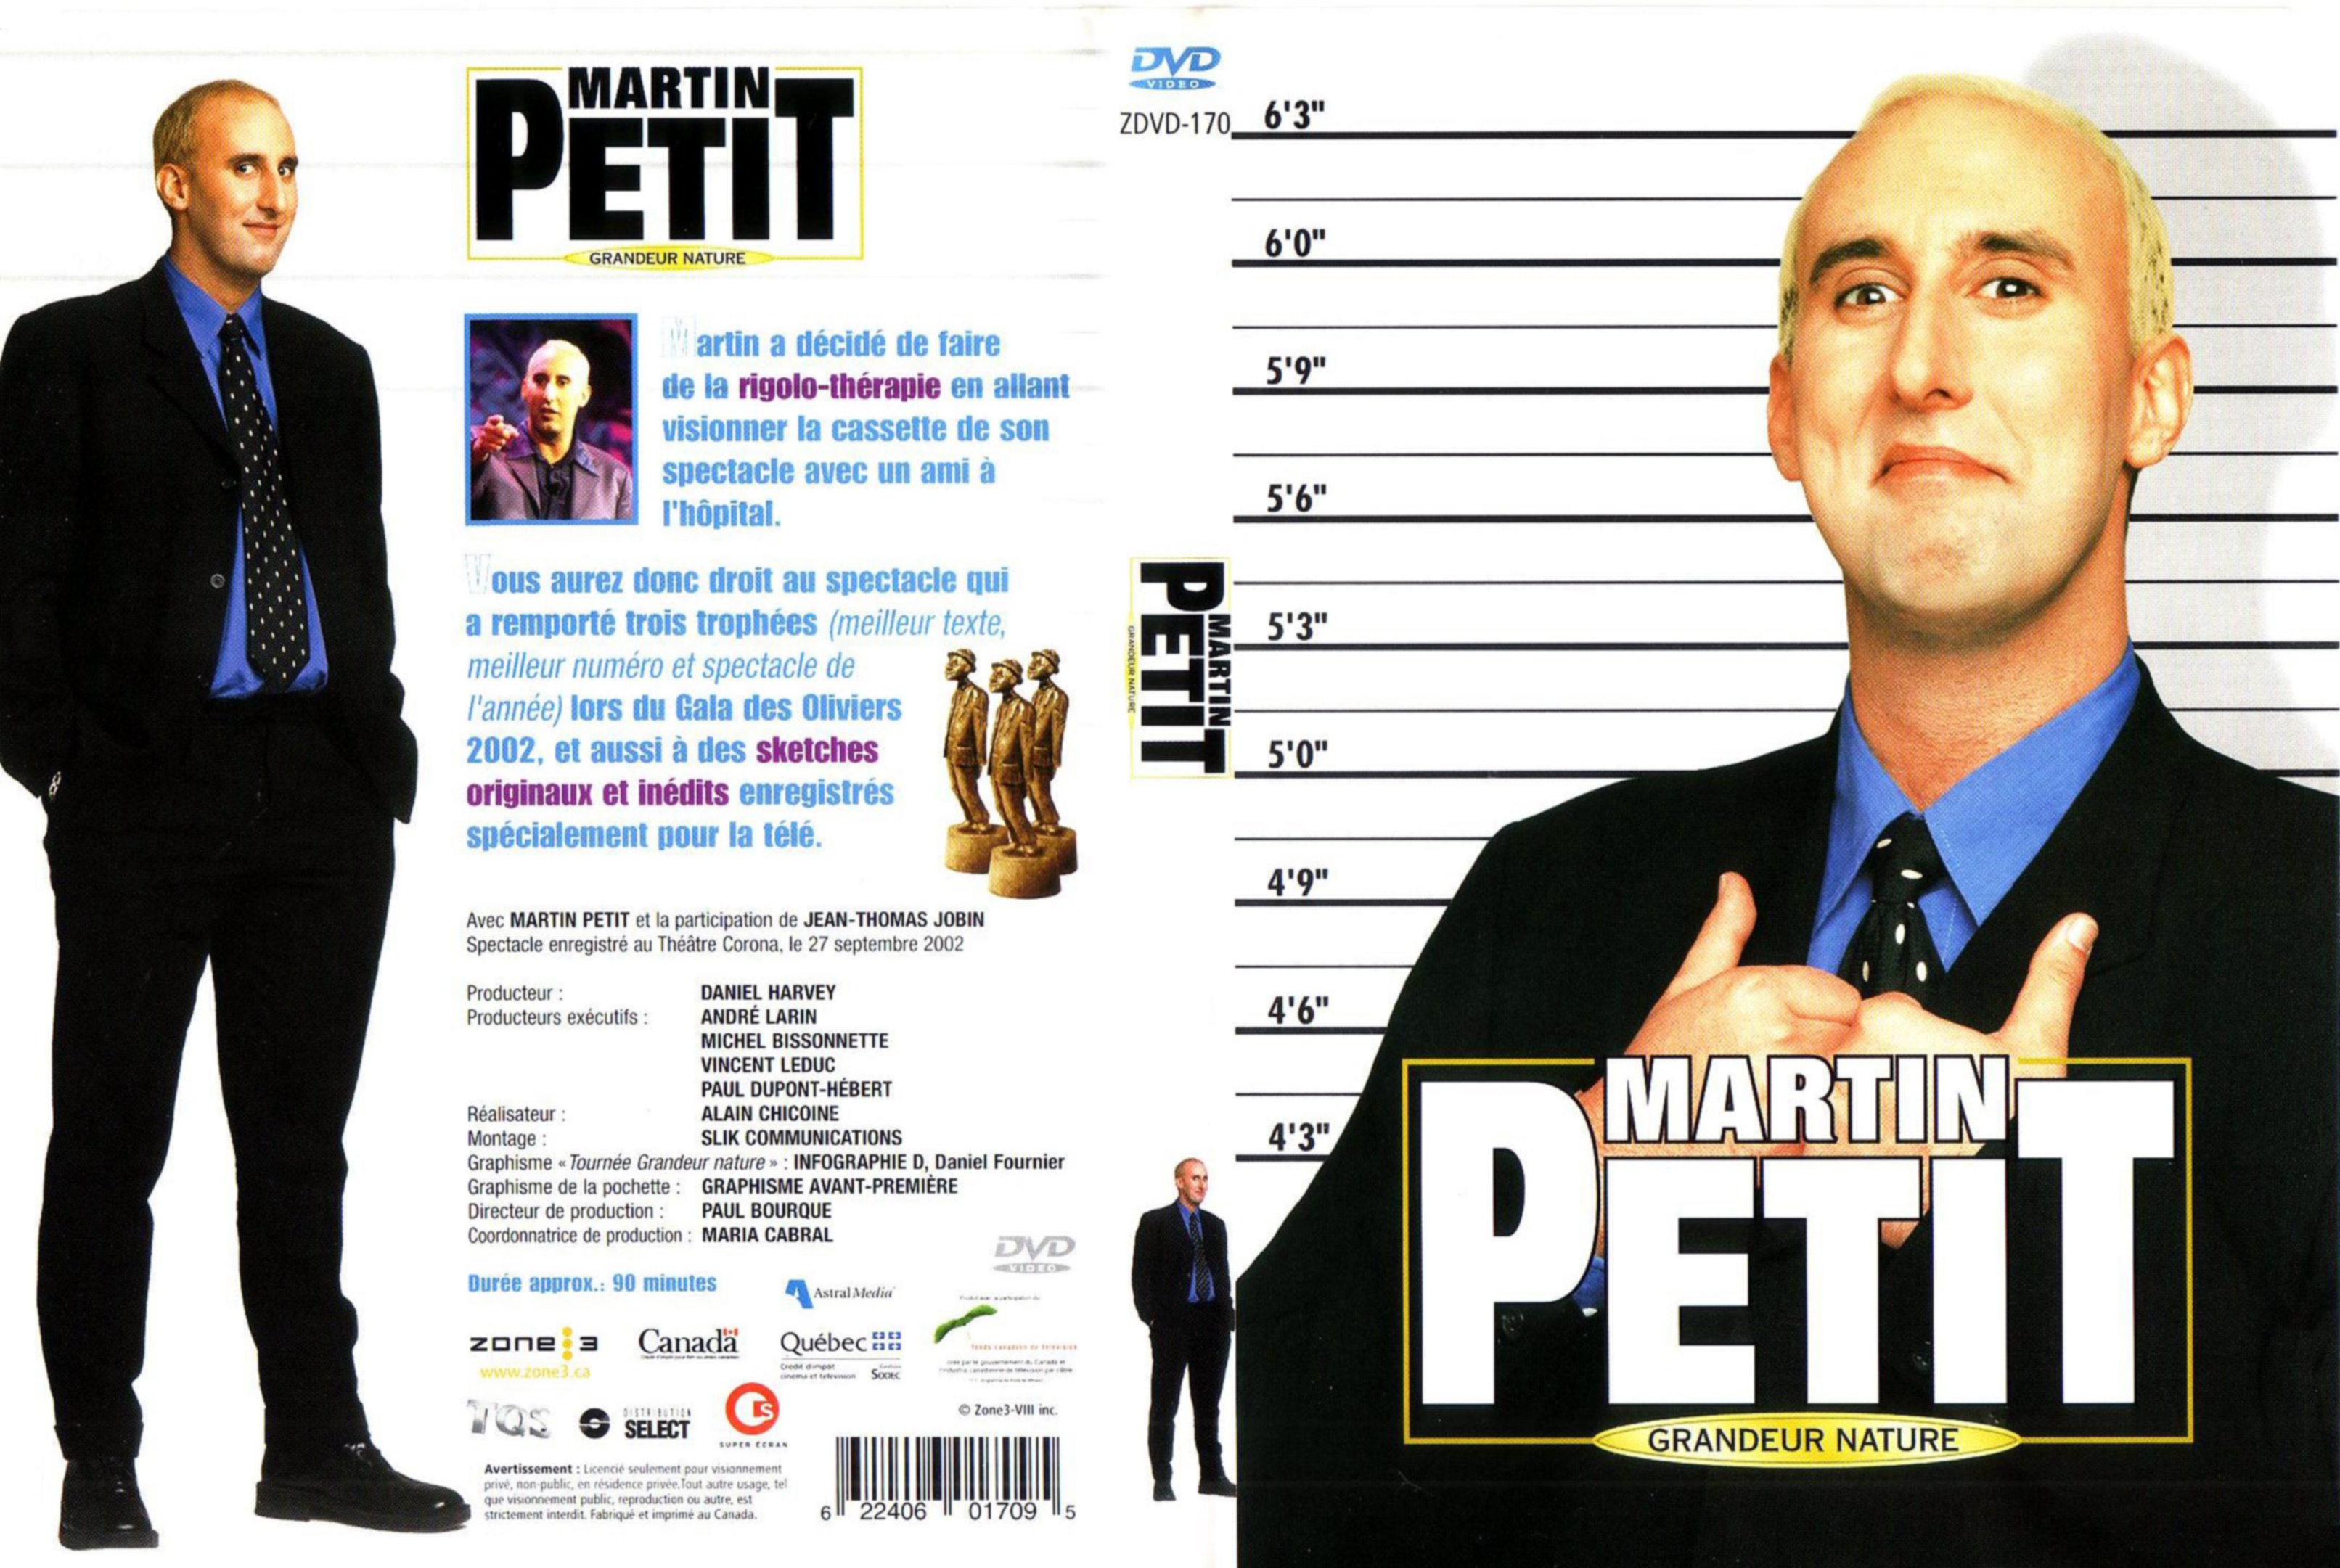 Jaquette DVD Martin Petit - Grandeur nature